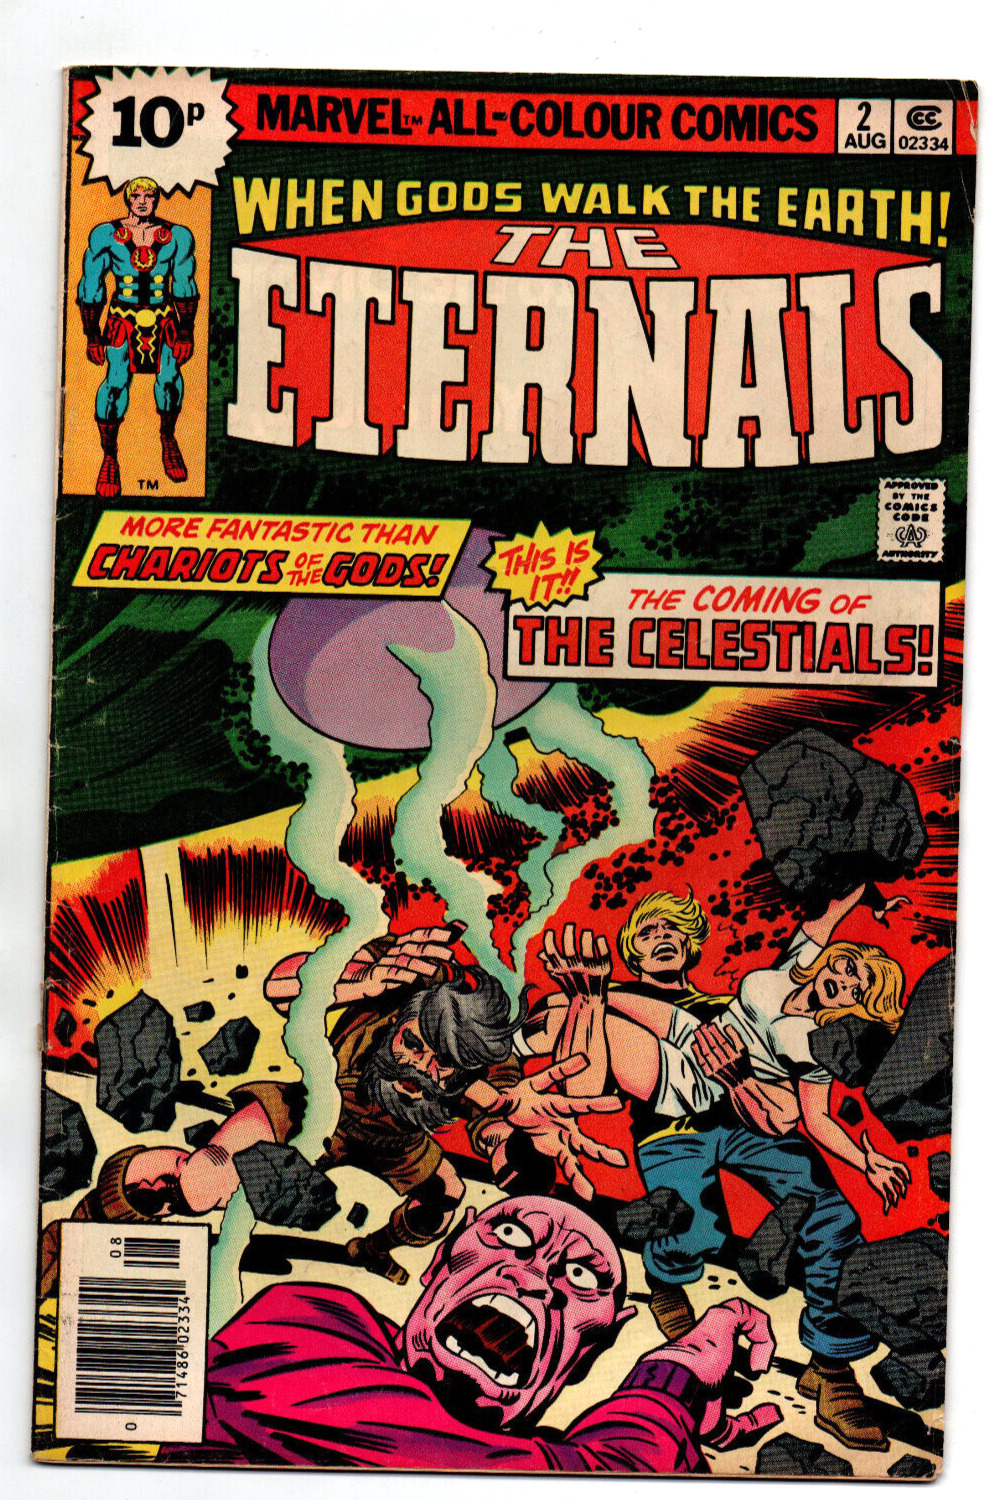 The Eternals #2 - Jack Kirby - 1st app Ajak - UK Price variant - 1976 - VG